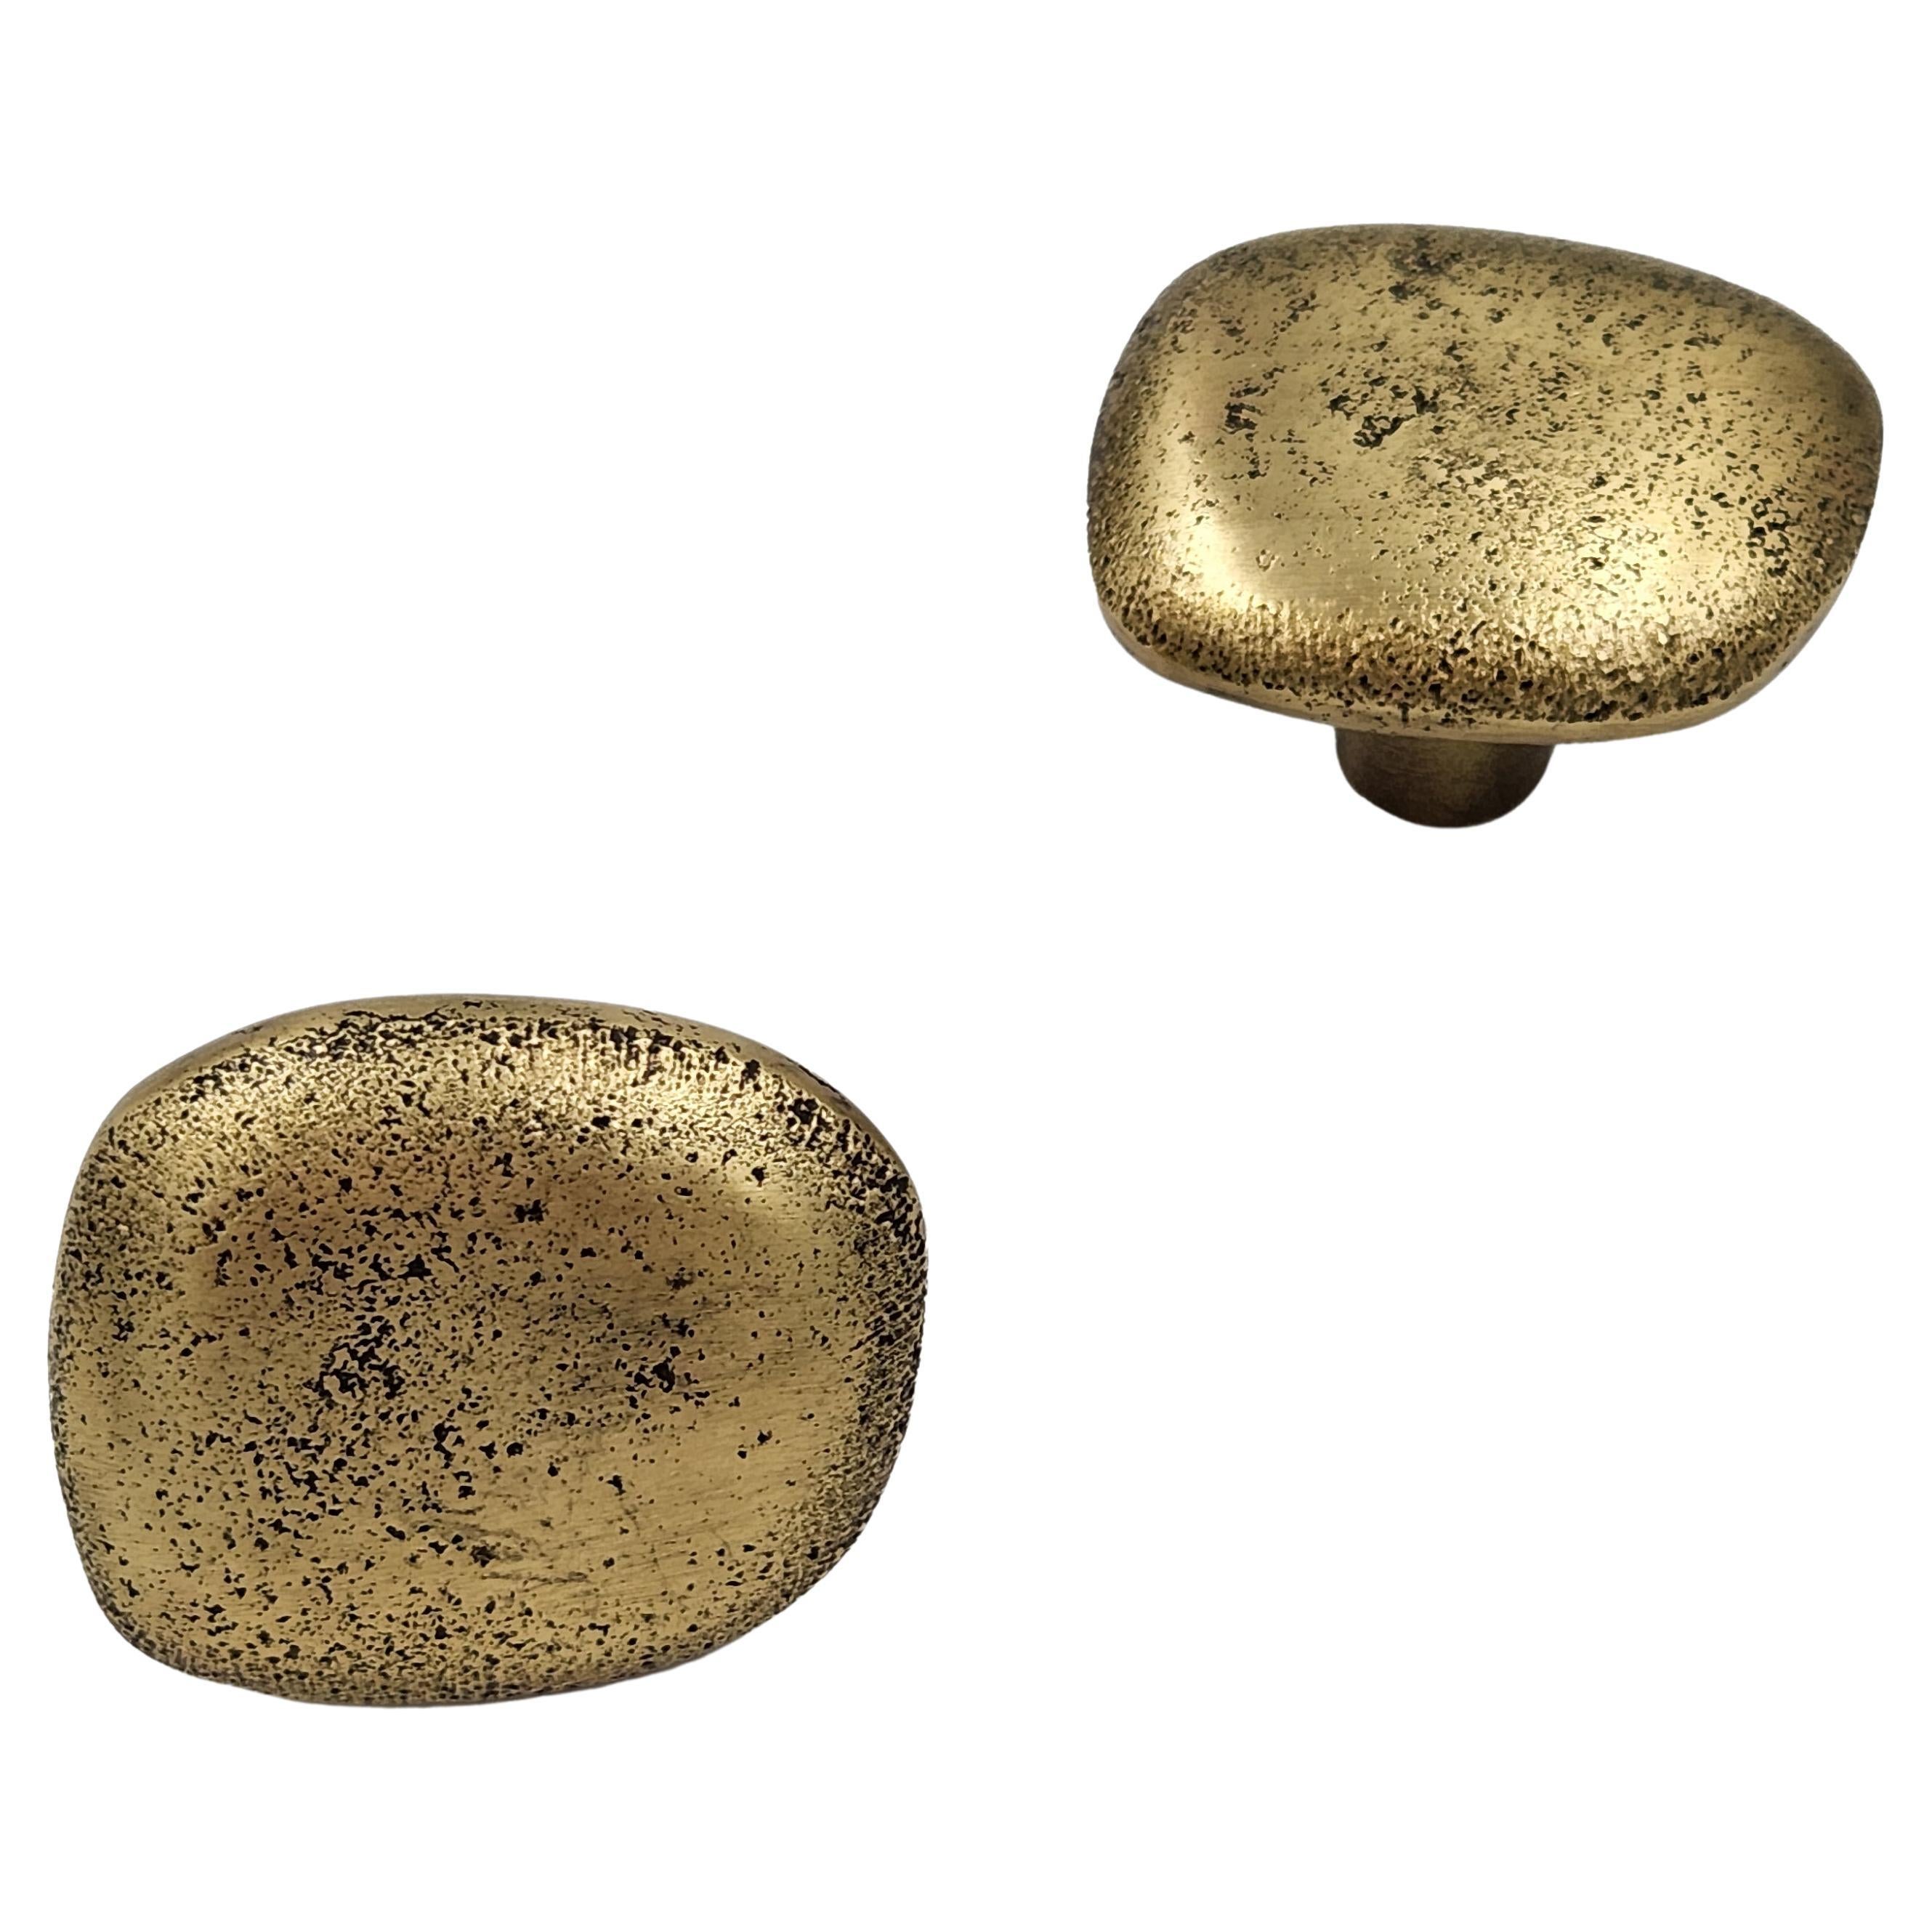 Solid Brass Door Knobs Mineral Inspiration 4 x 4 cm